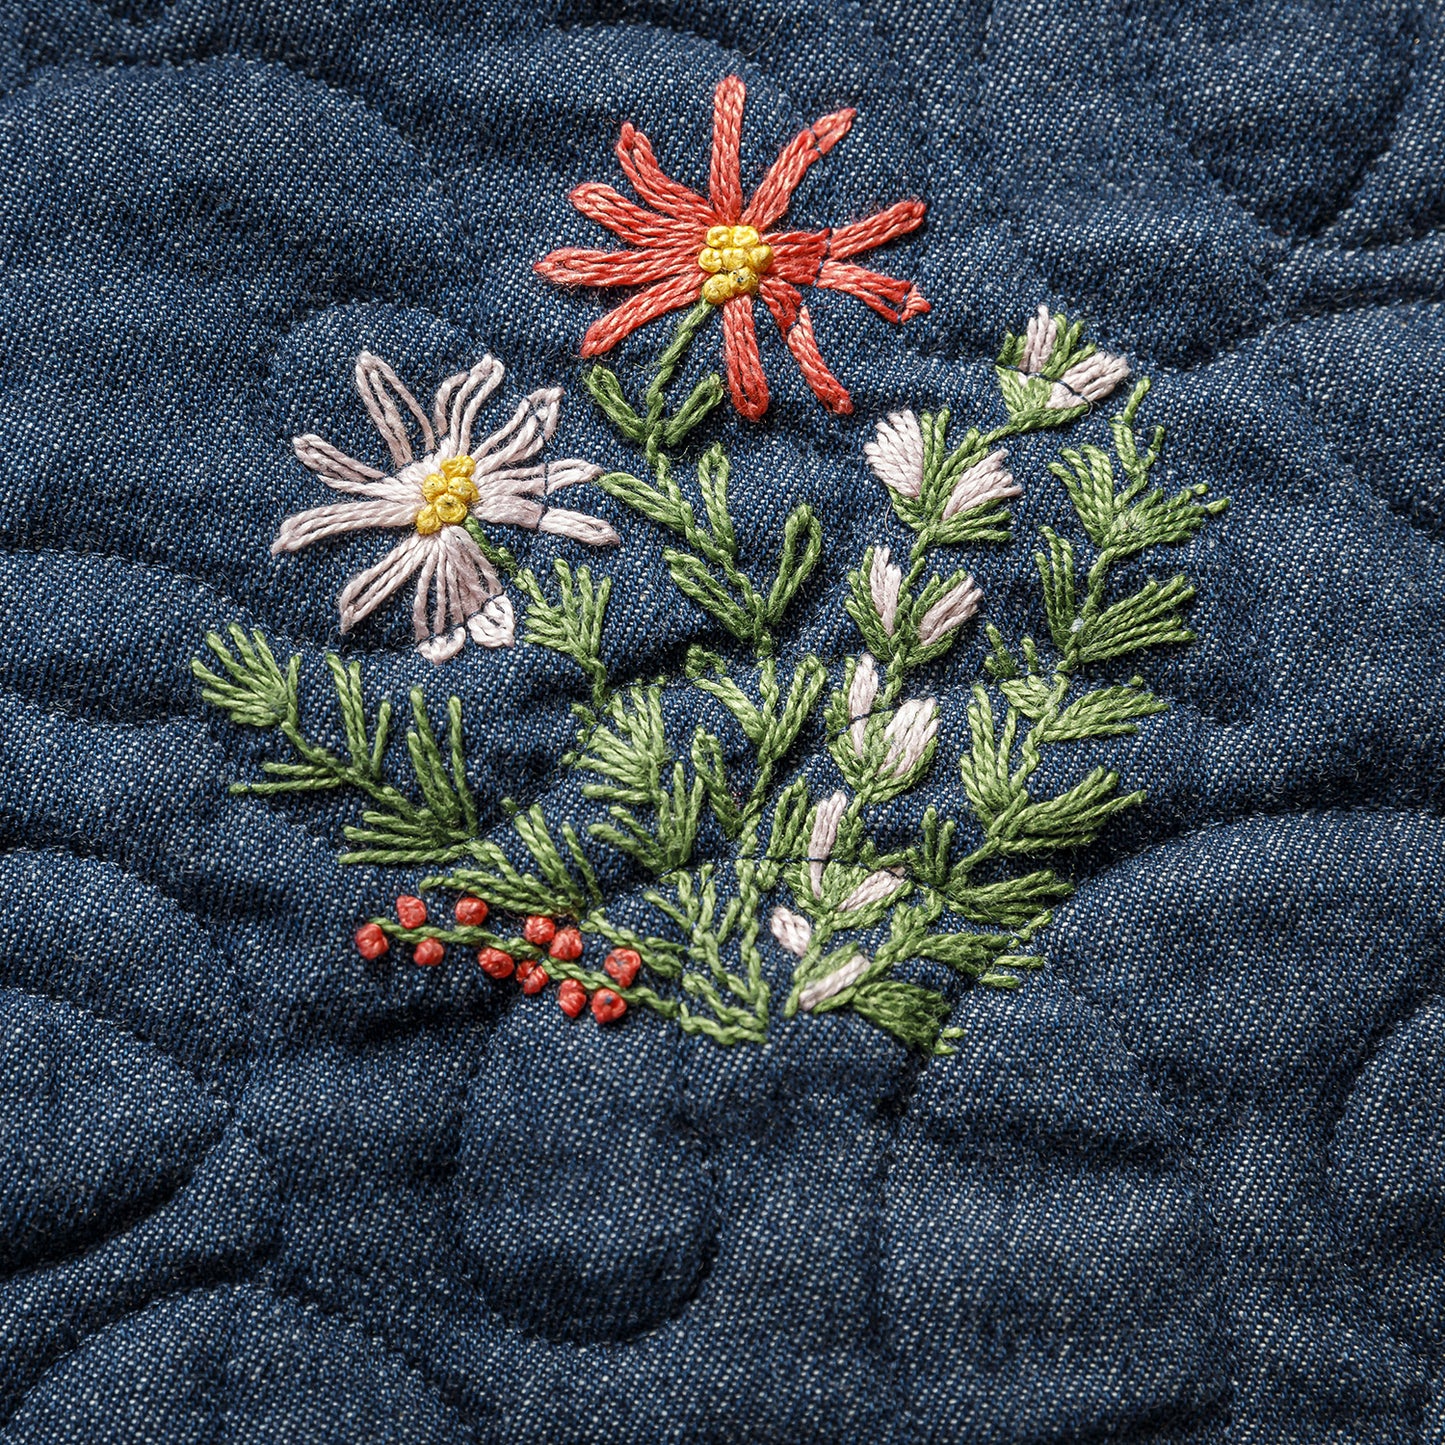 PREORDER - Ingrid's Wildflowers - An Heirloom Embroidery Kit by Missouri Star Alternative View #30